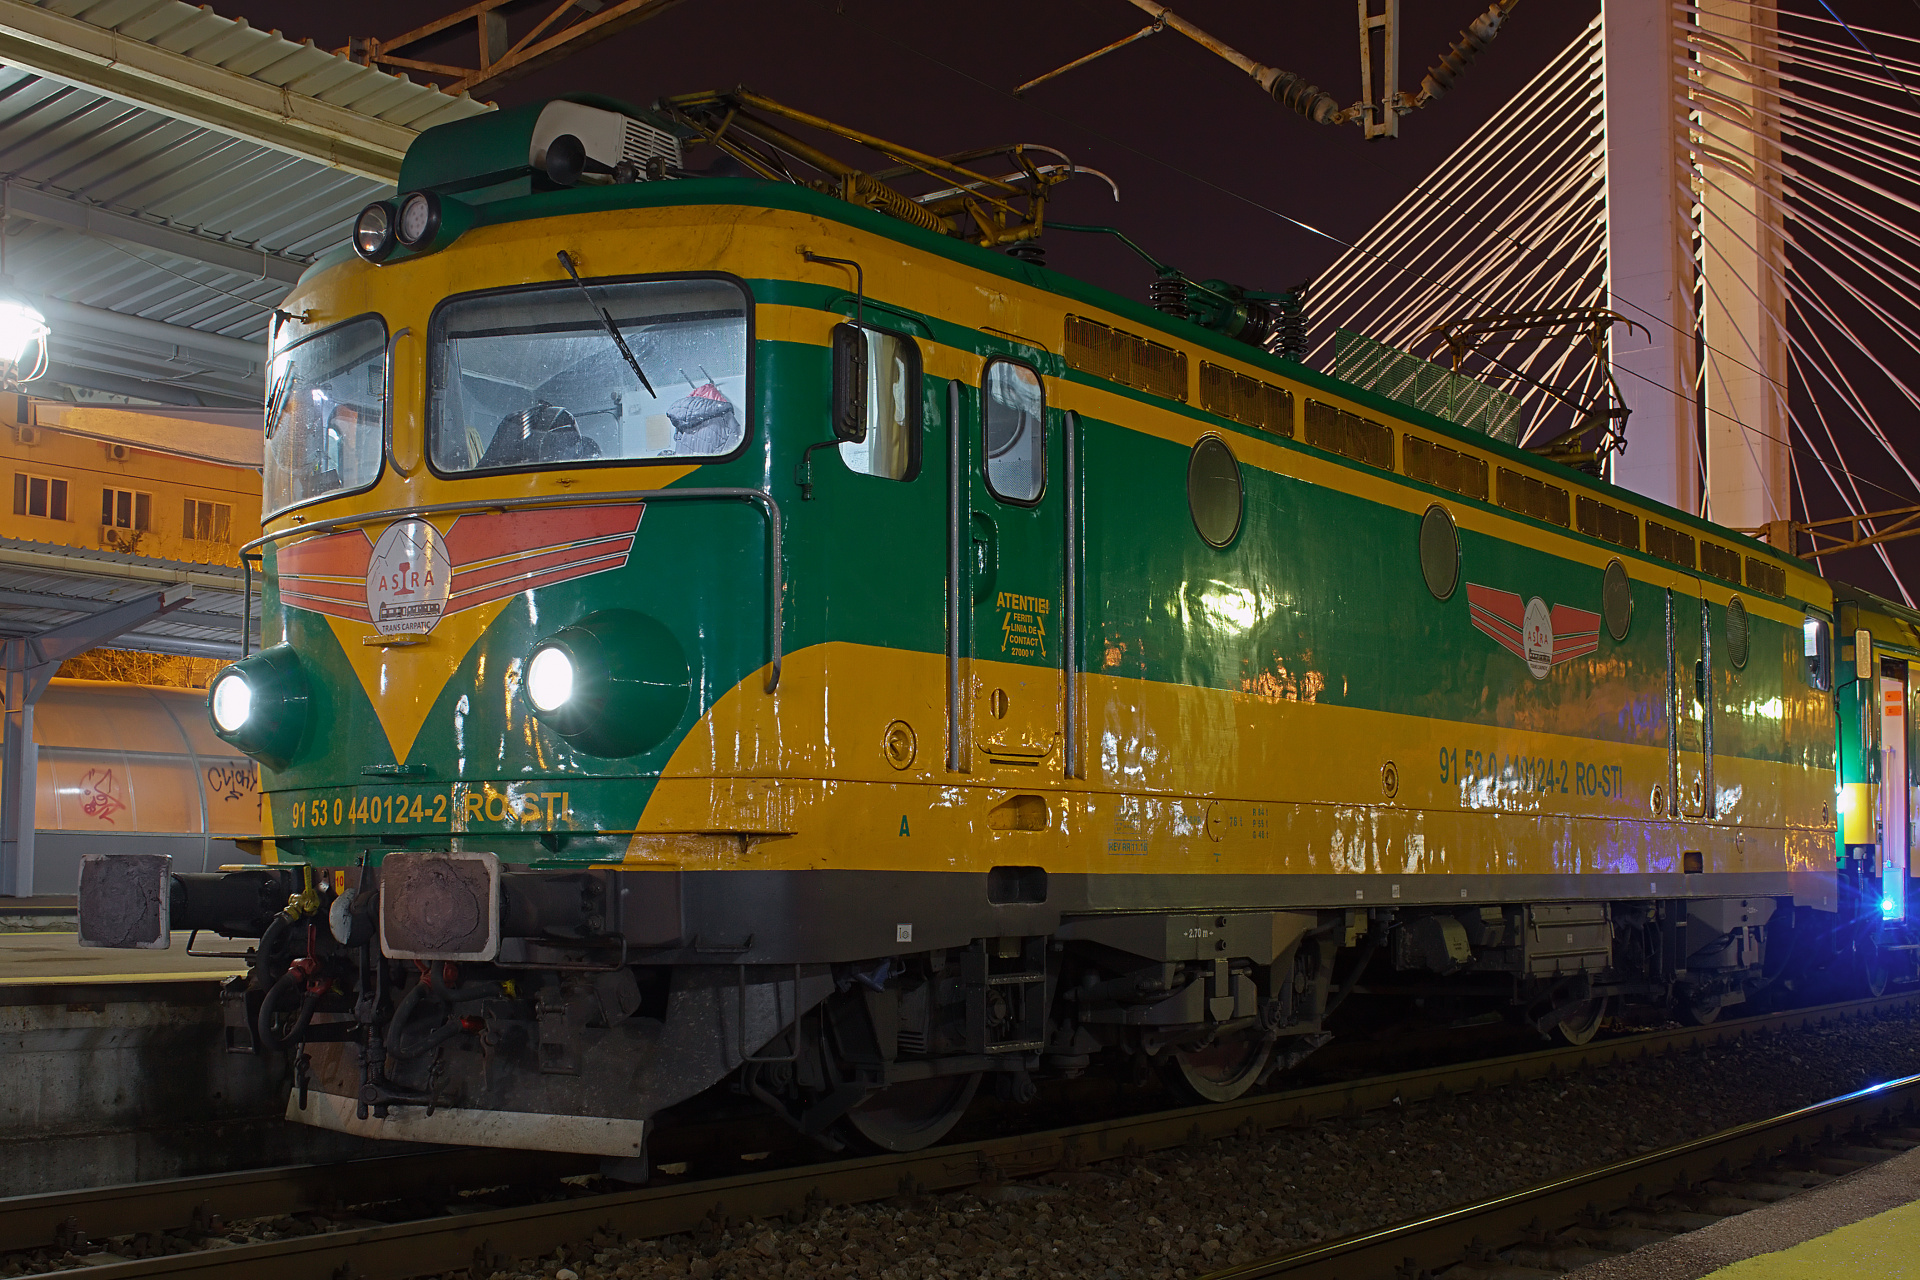 Končar 441 Class 44 0124-2 (Podróże » Bukareszt » Pociągi i lokomotywy)